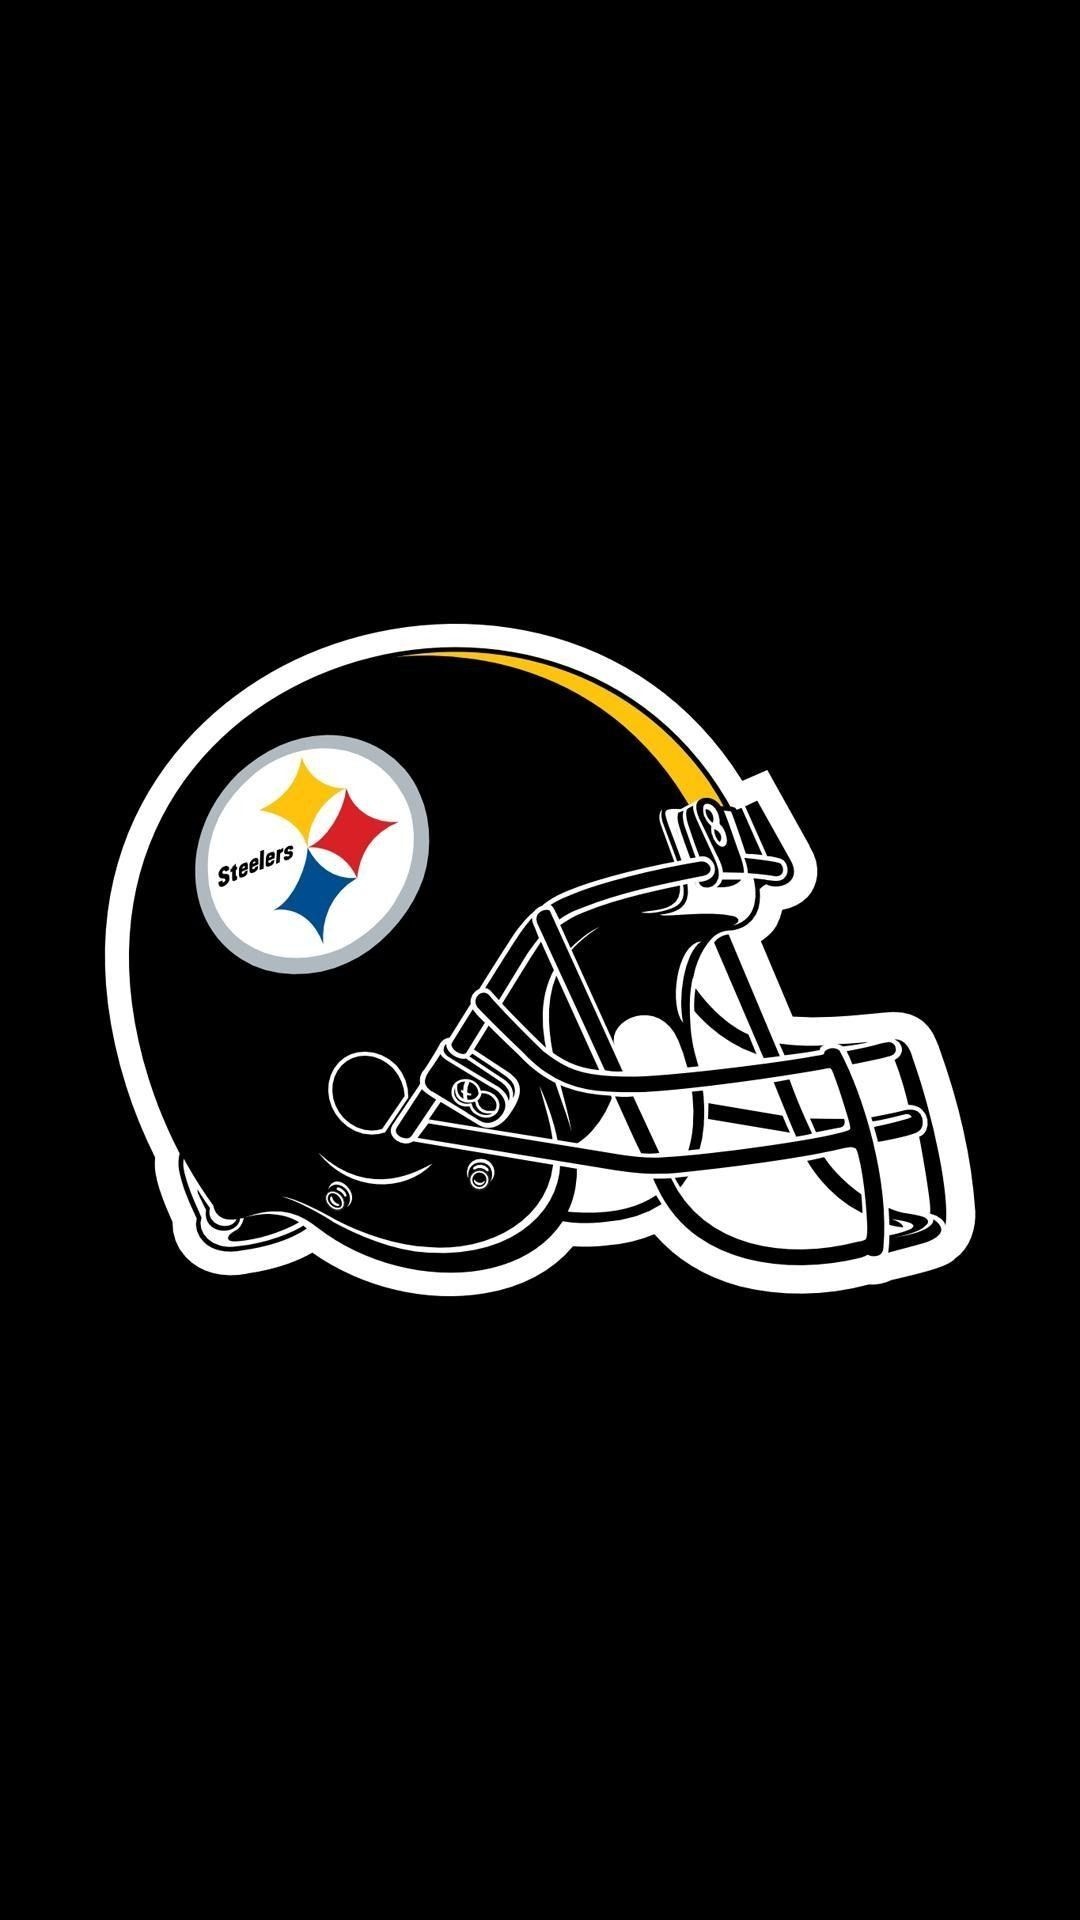 Pittsburgh Steelers, Team pride, Sports enthusiasm, Female fan representation, Football spirit, 1080x1920 Full HD Phone